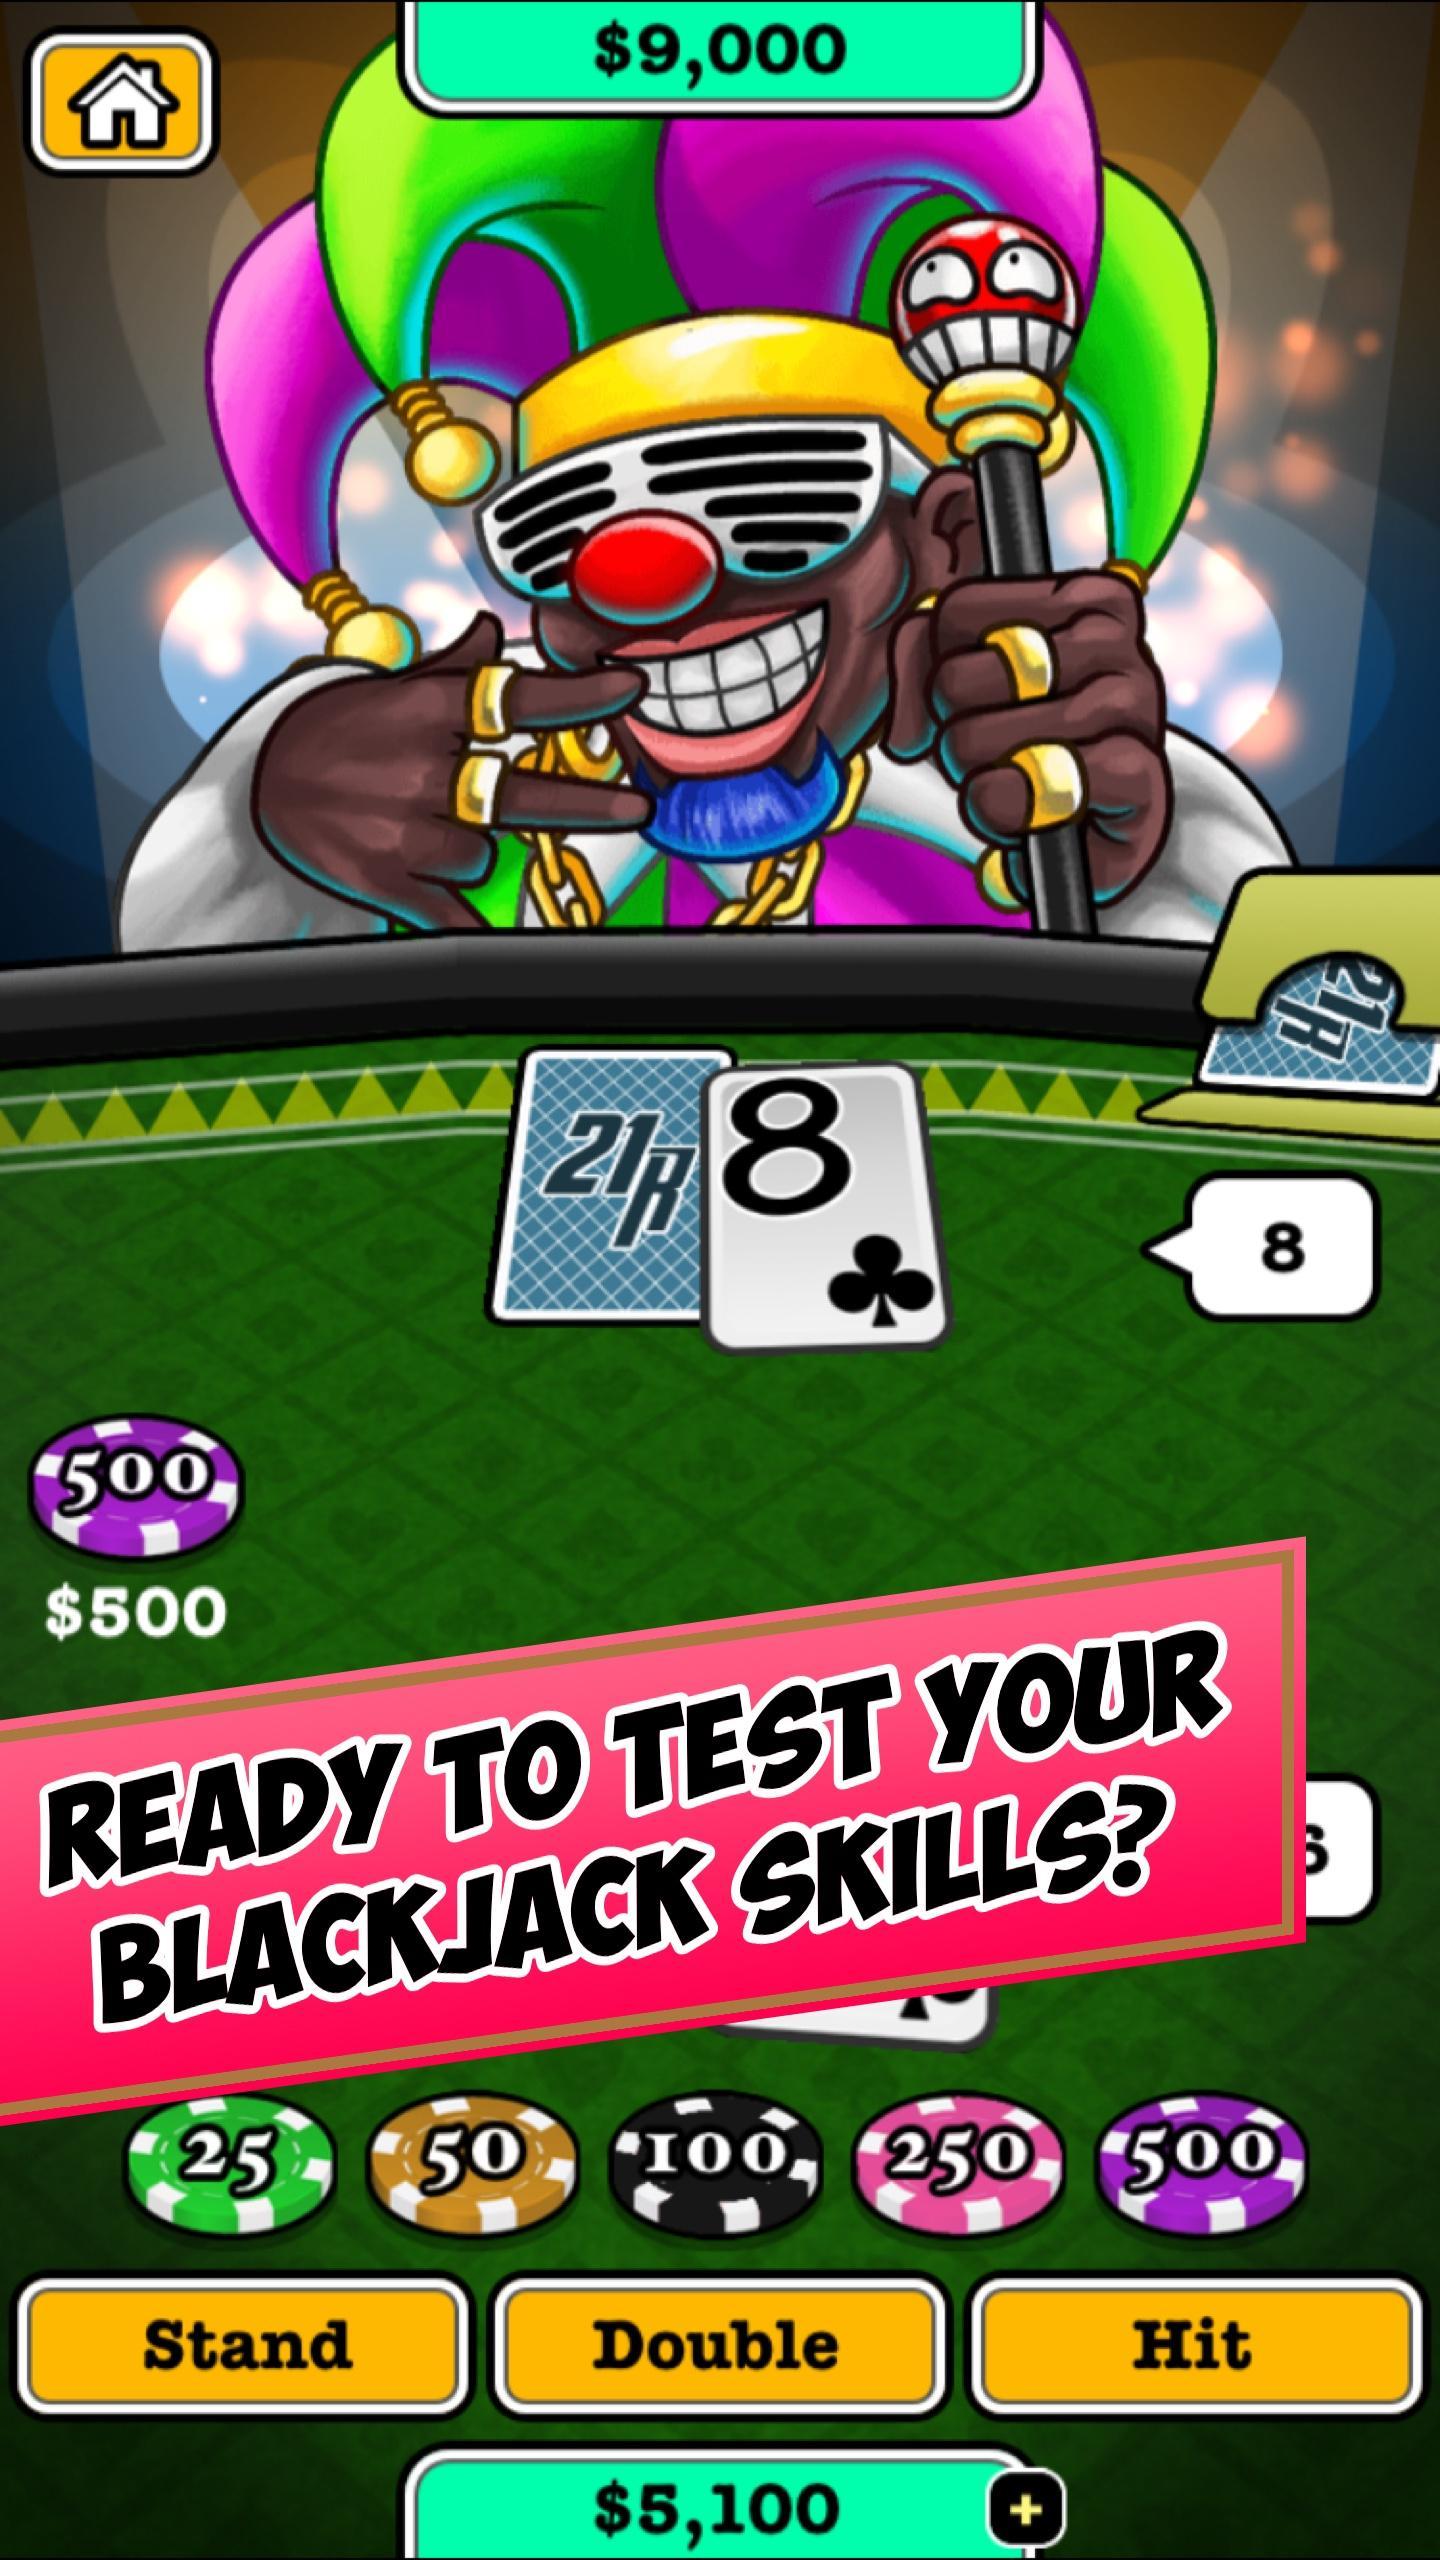 Blackjack 21 Royale for Android - APK Download